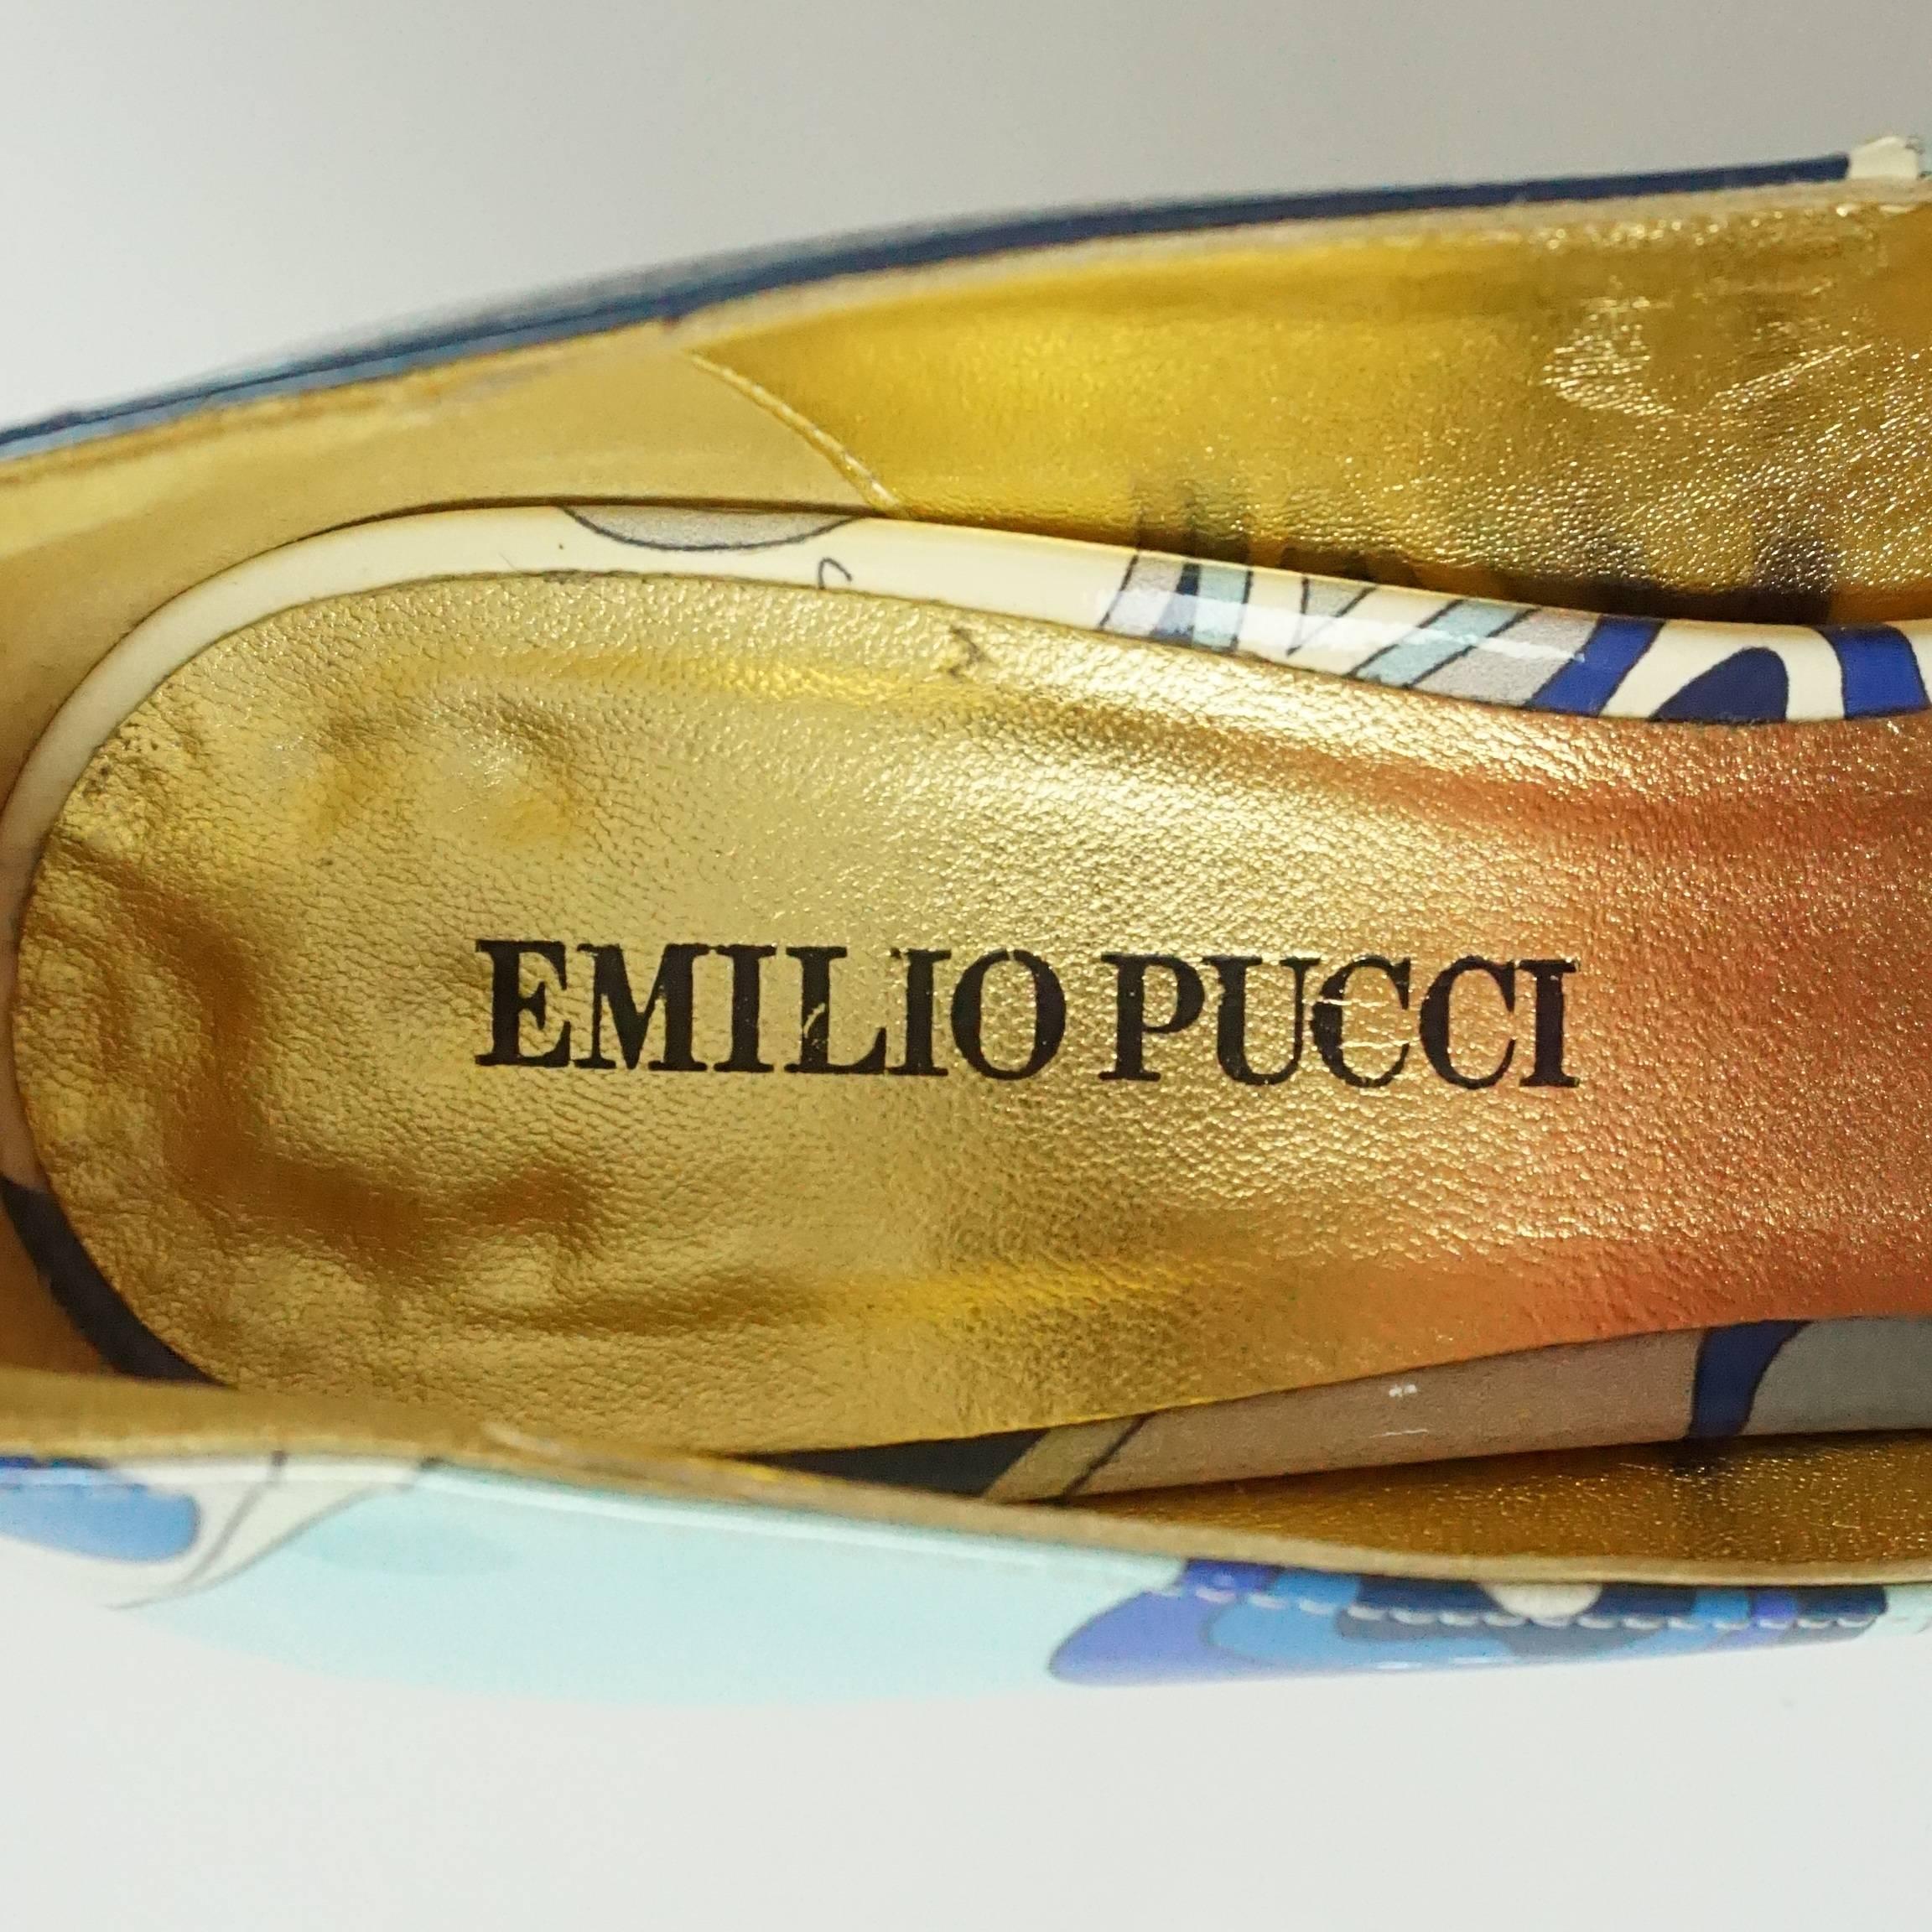 Emilio Pucci Blue Print Patent Peeptoe - 36 1